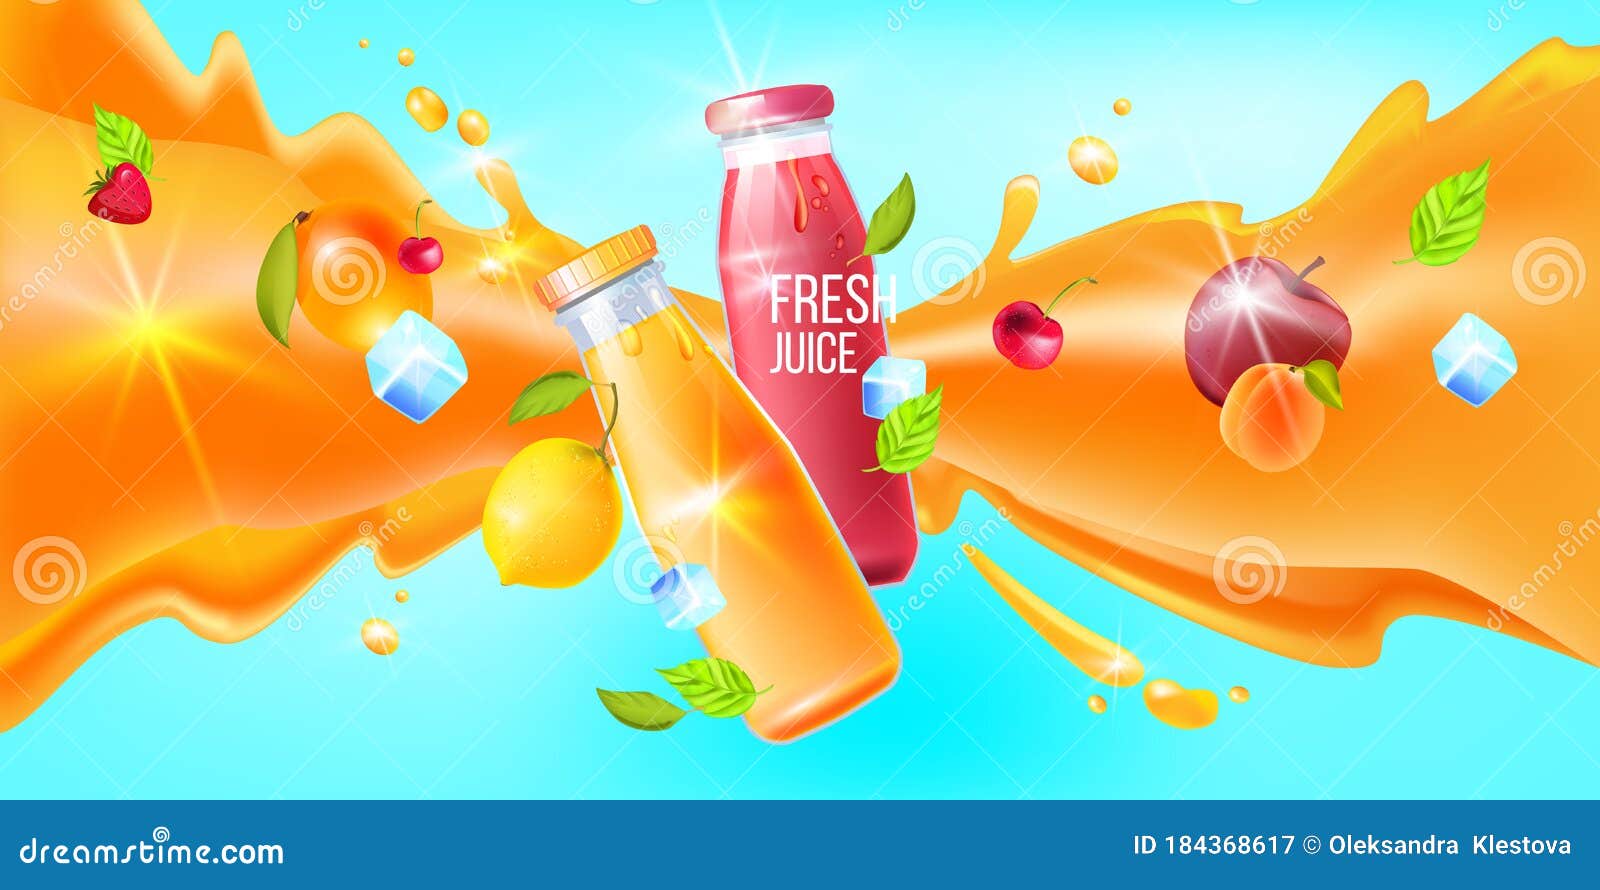 Fresh Juice Background with Bottles, Splash, Exotic Fruit, Ice, Leaves.  Stock Vector - Illustration of design, leaves: 184368617